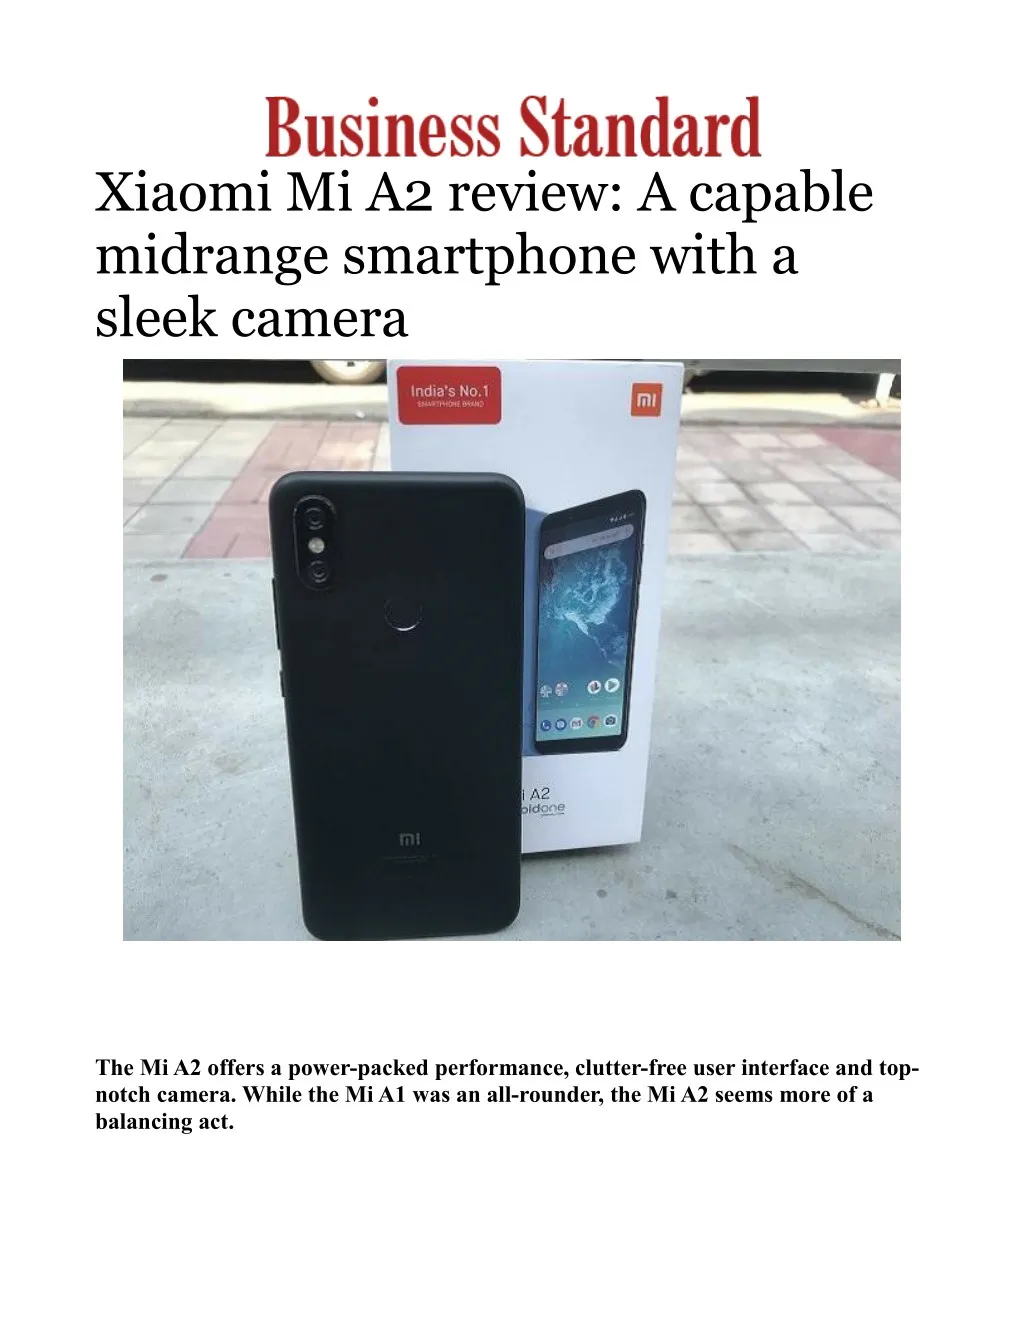 xiaomi mi a2 review a capable midrange smartphone